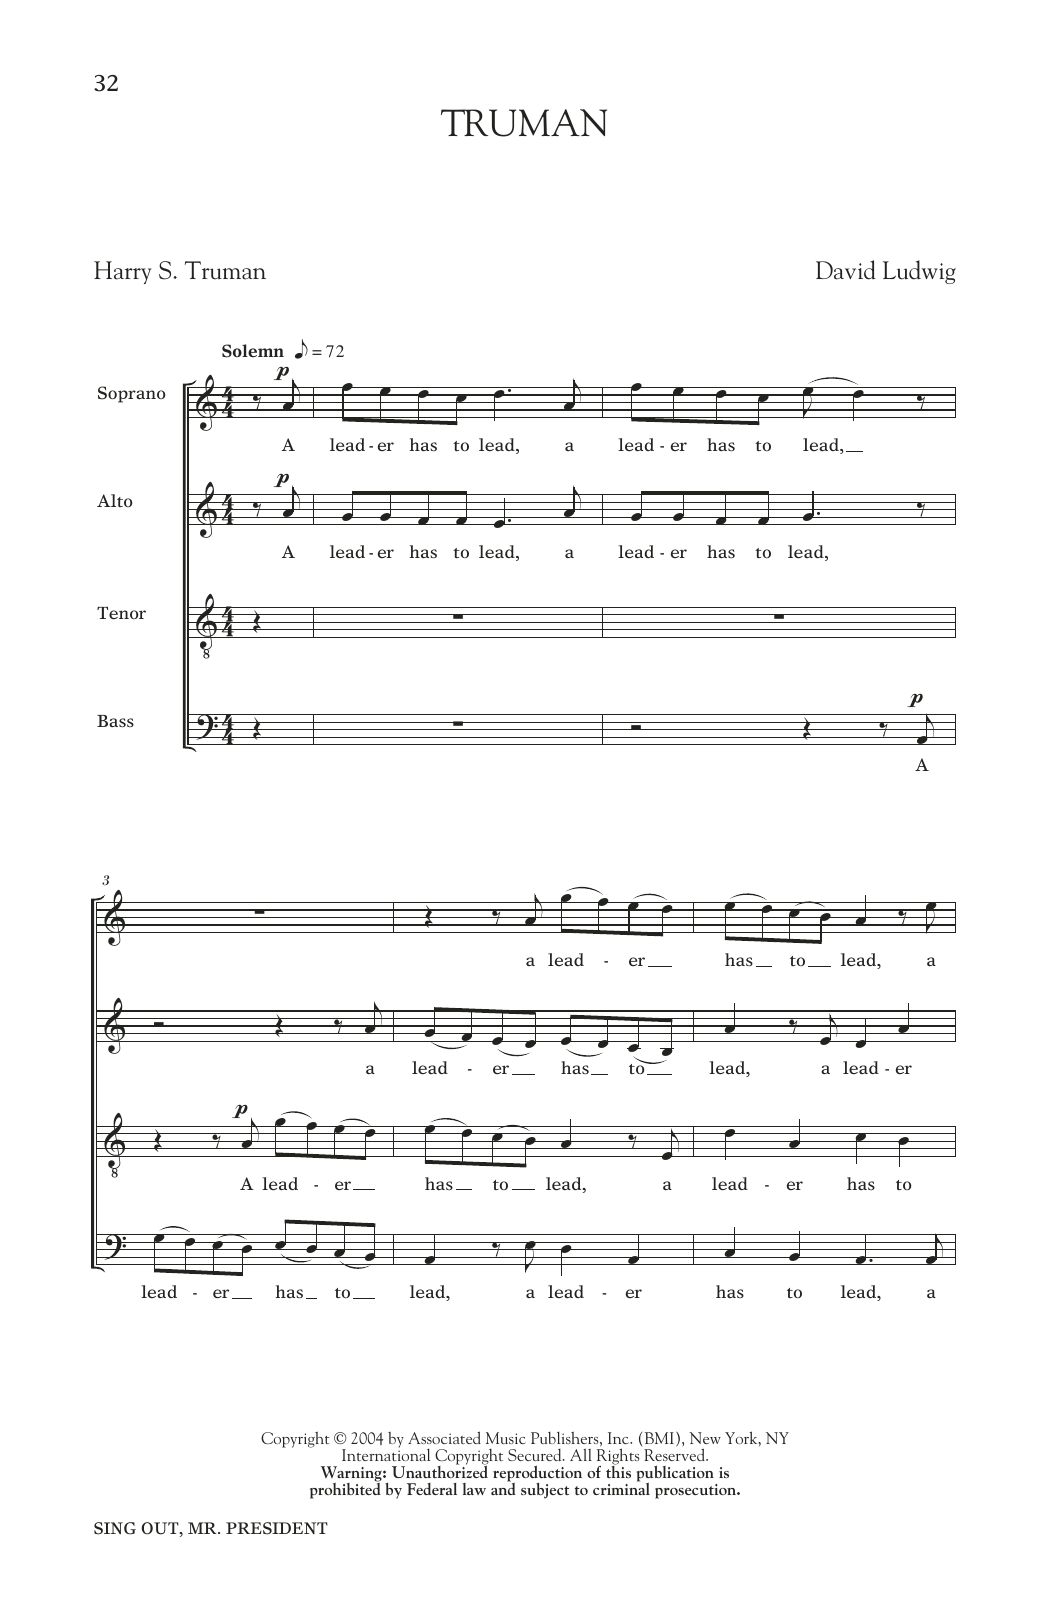 David Ludwig Truman Sheet Music Notes & Chords for Choral - Download or Print PDF